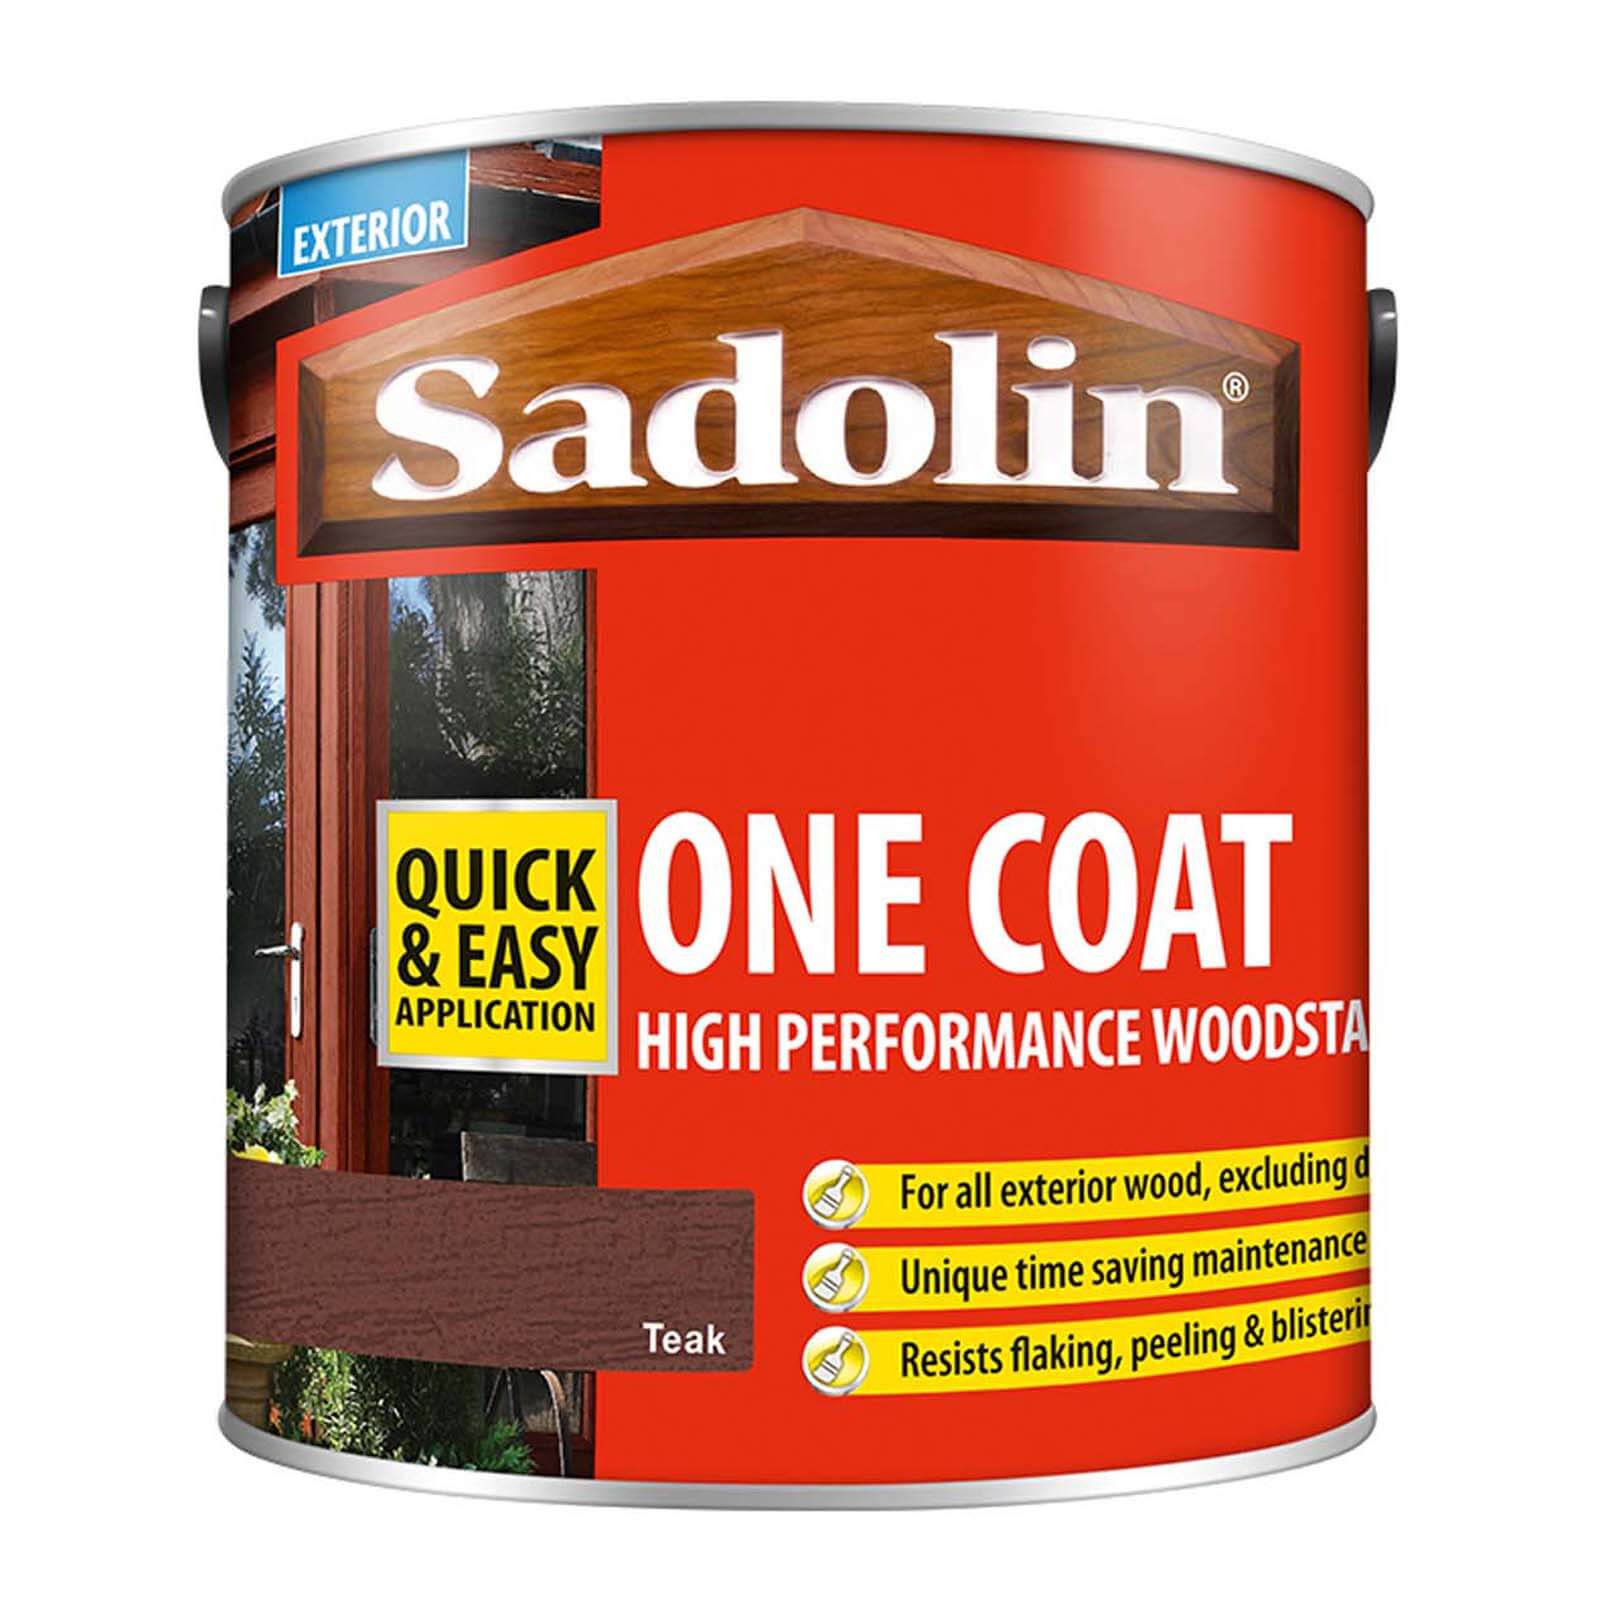 Sadolin One Coat High Performance Woodstain Teak - 2.5L